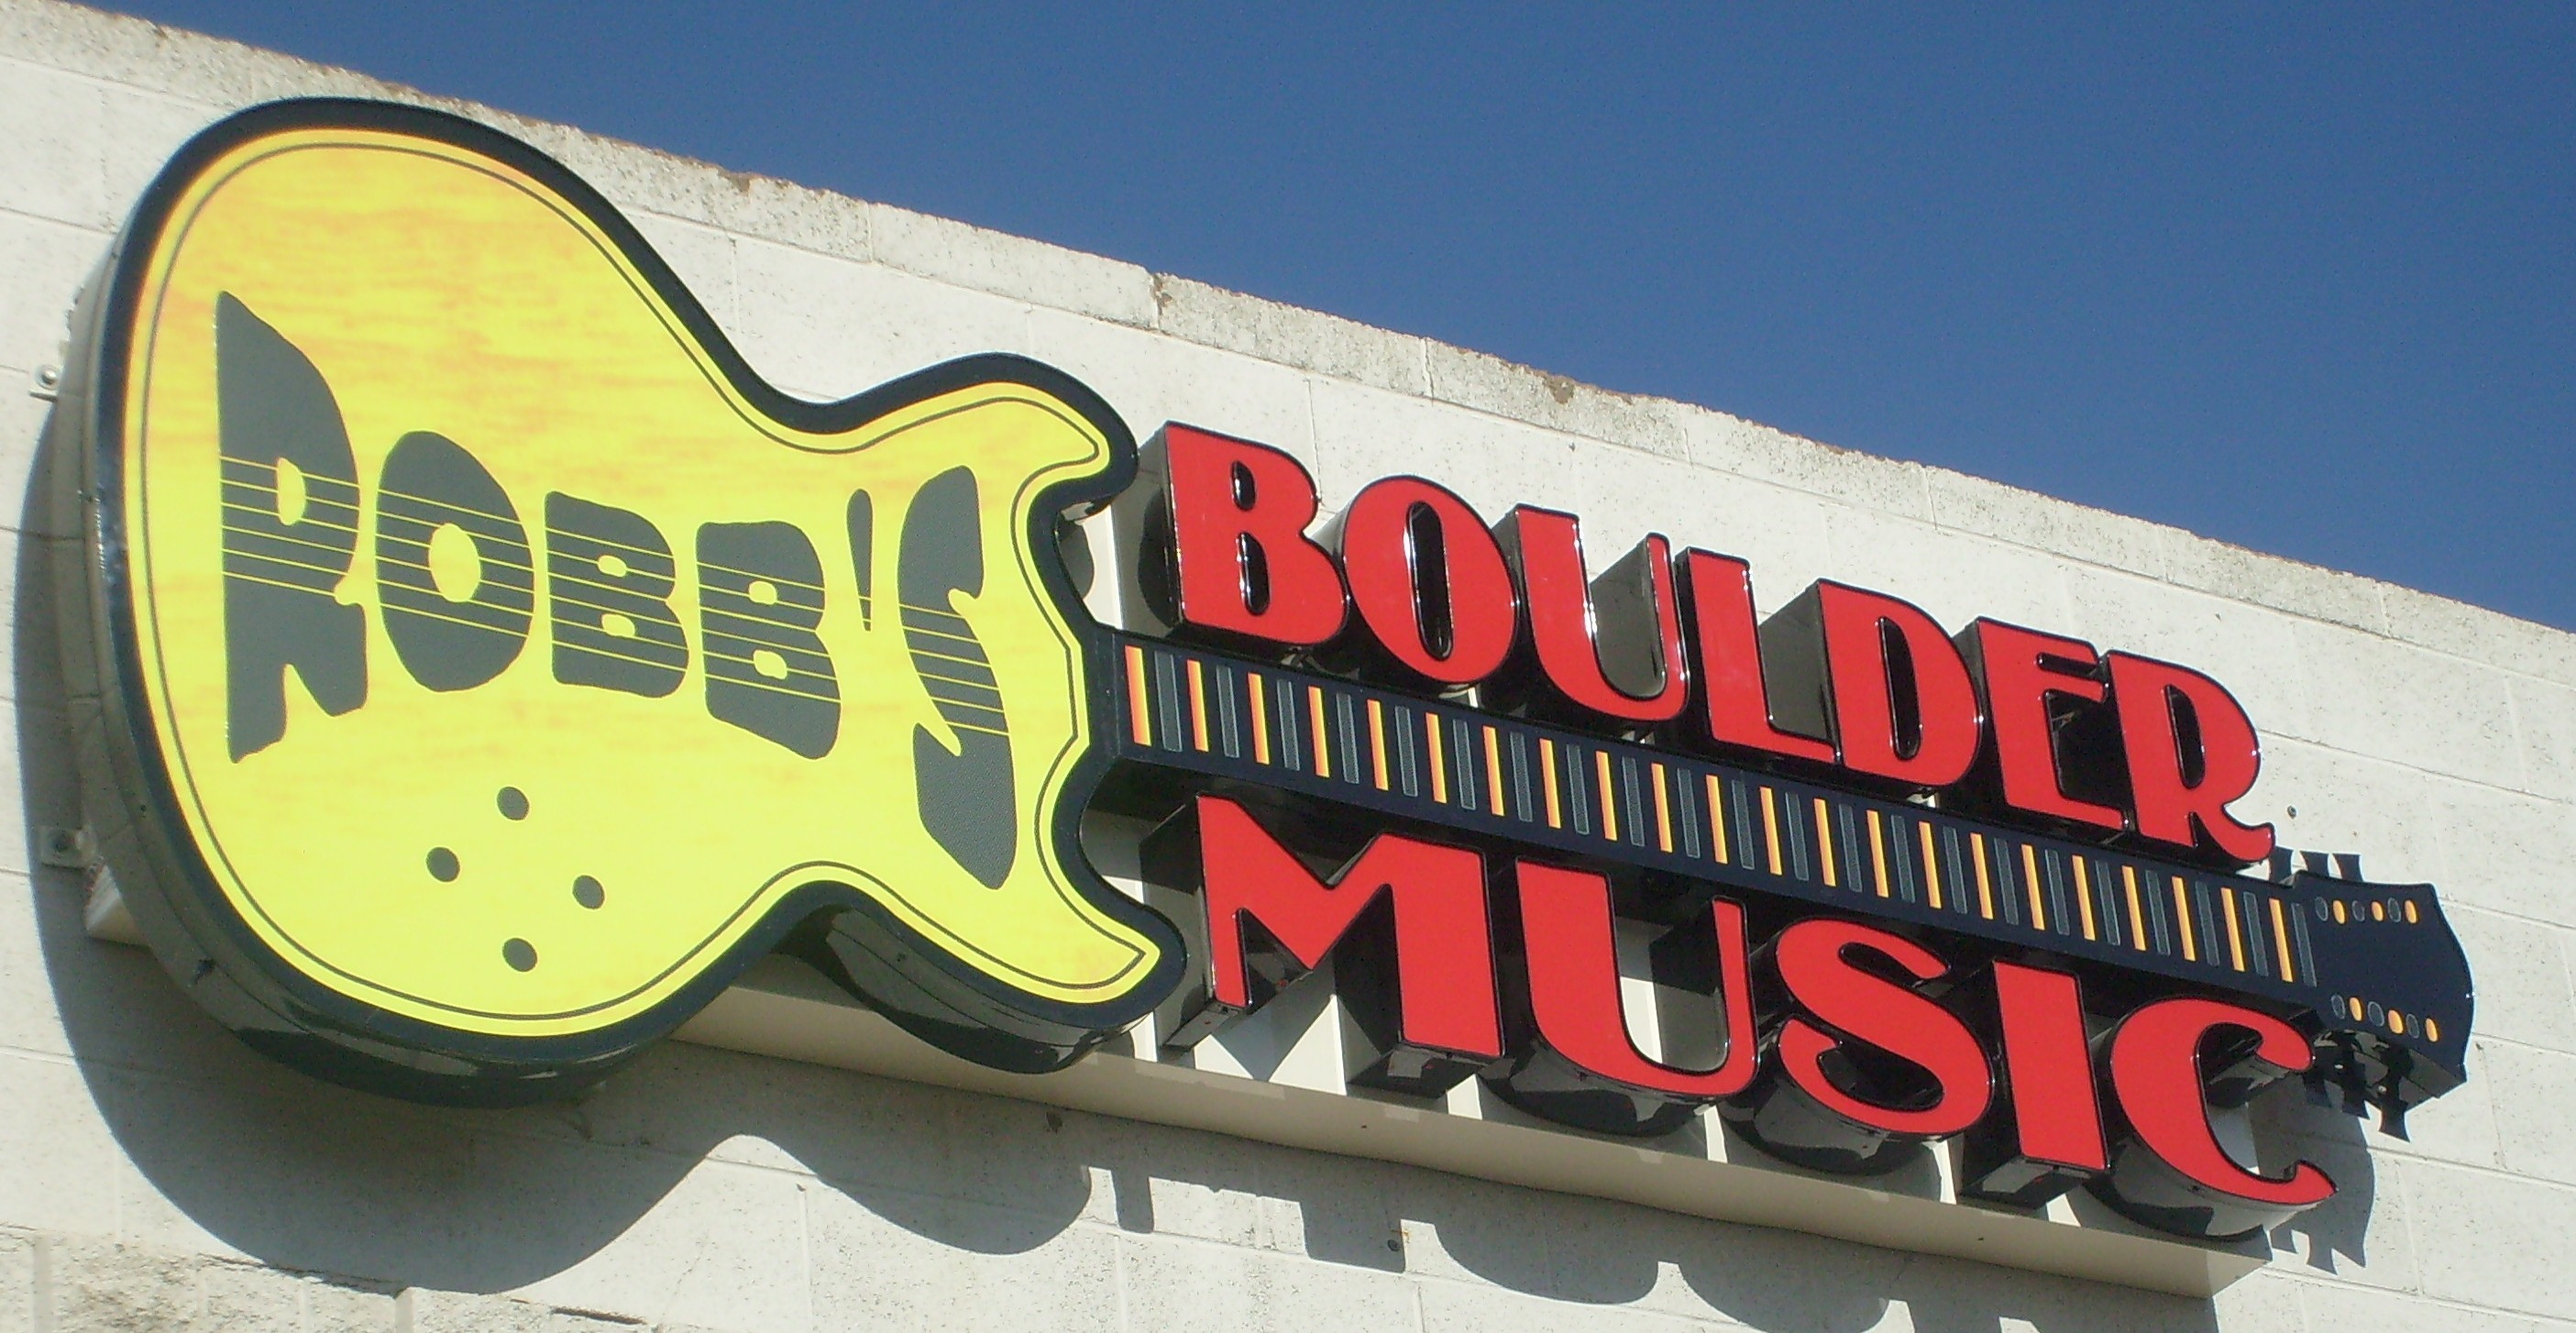 Robbs Boulder Music 2